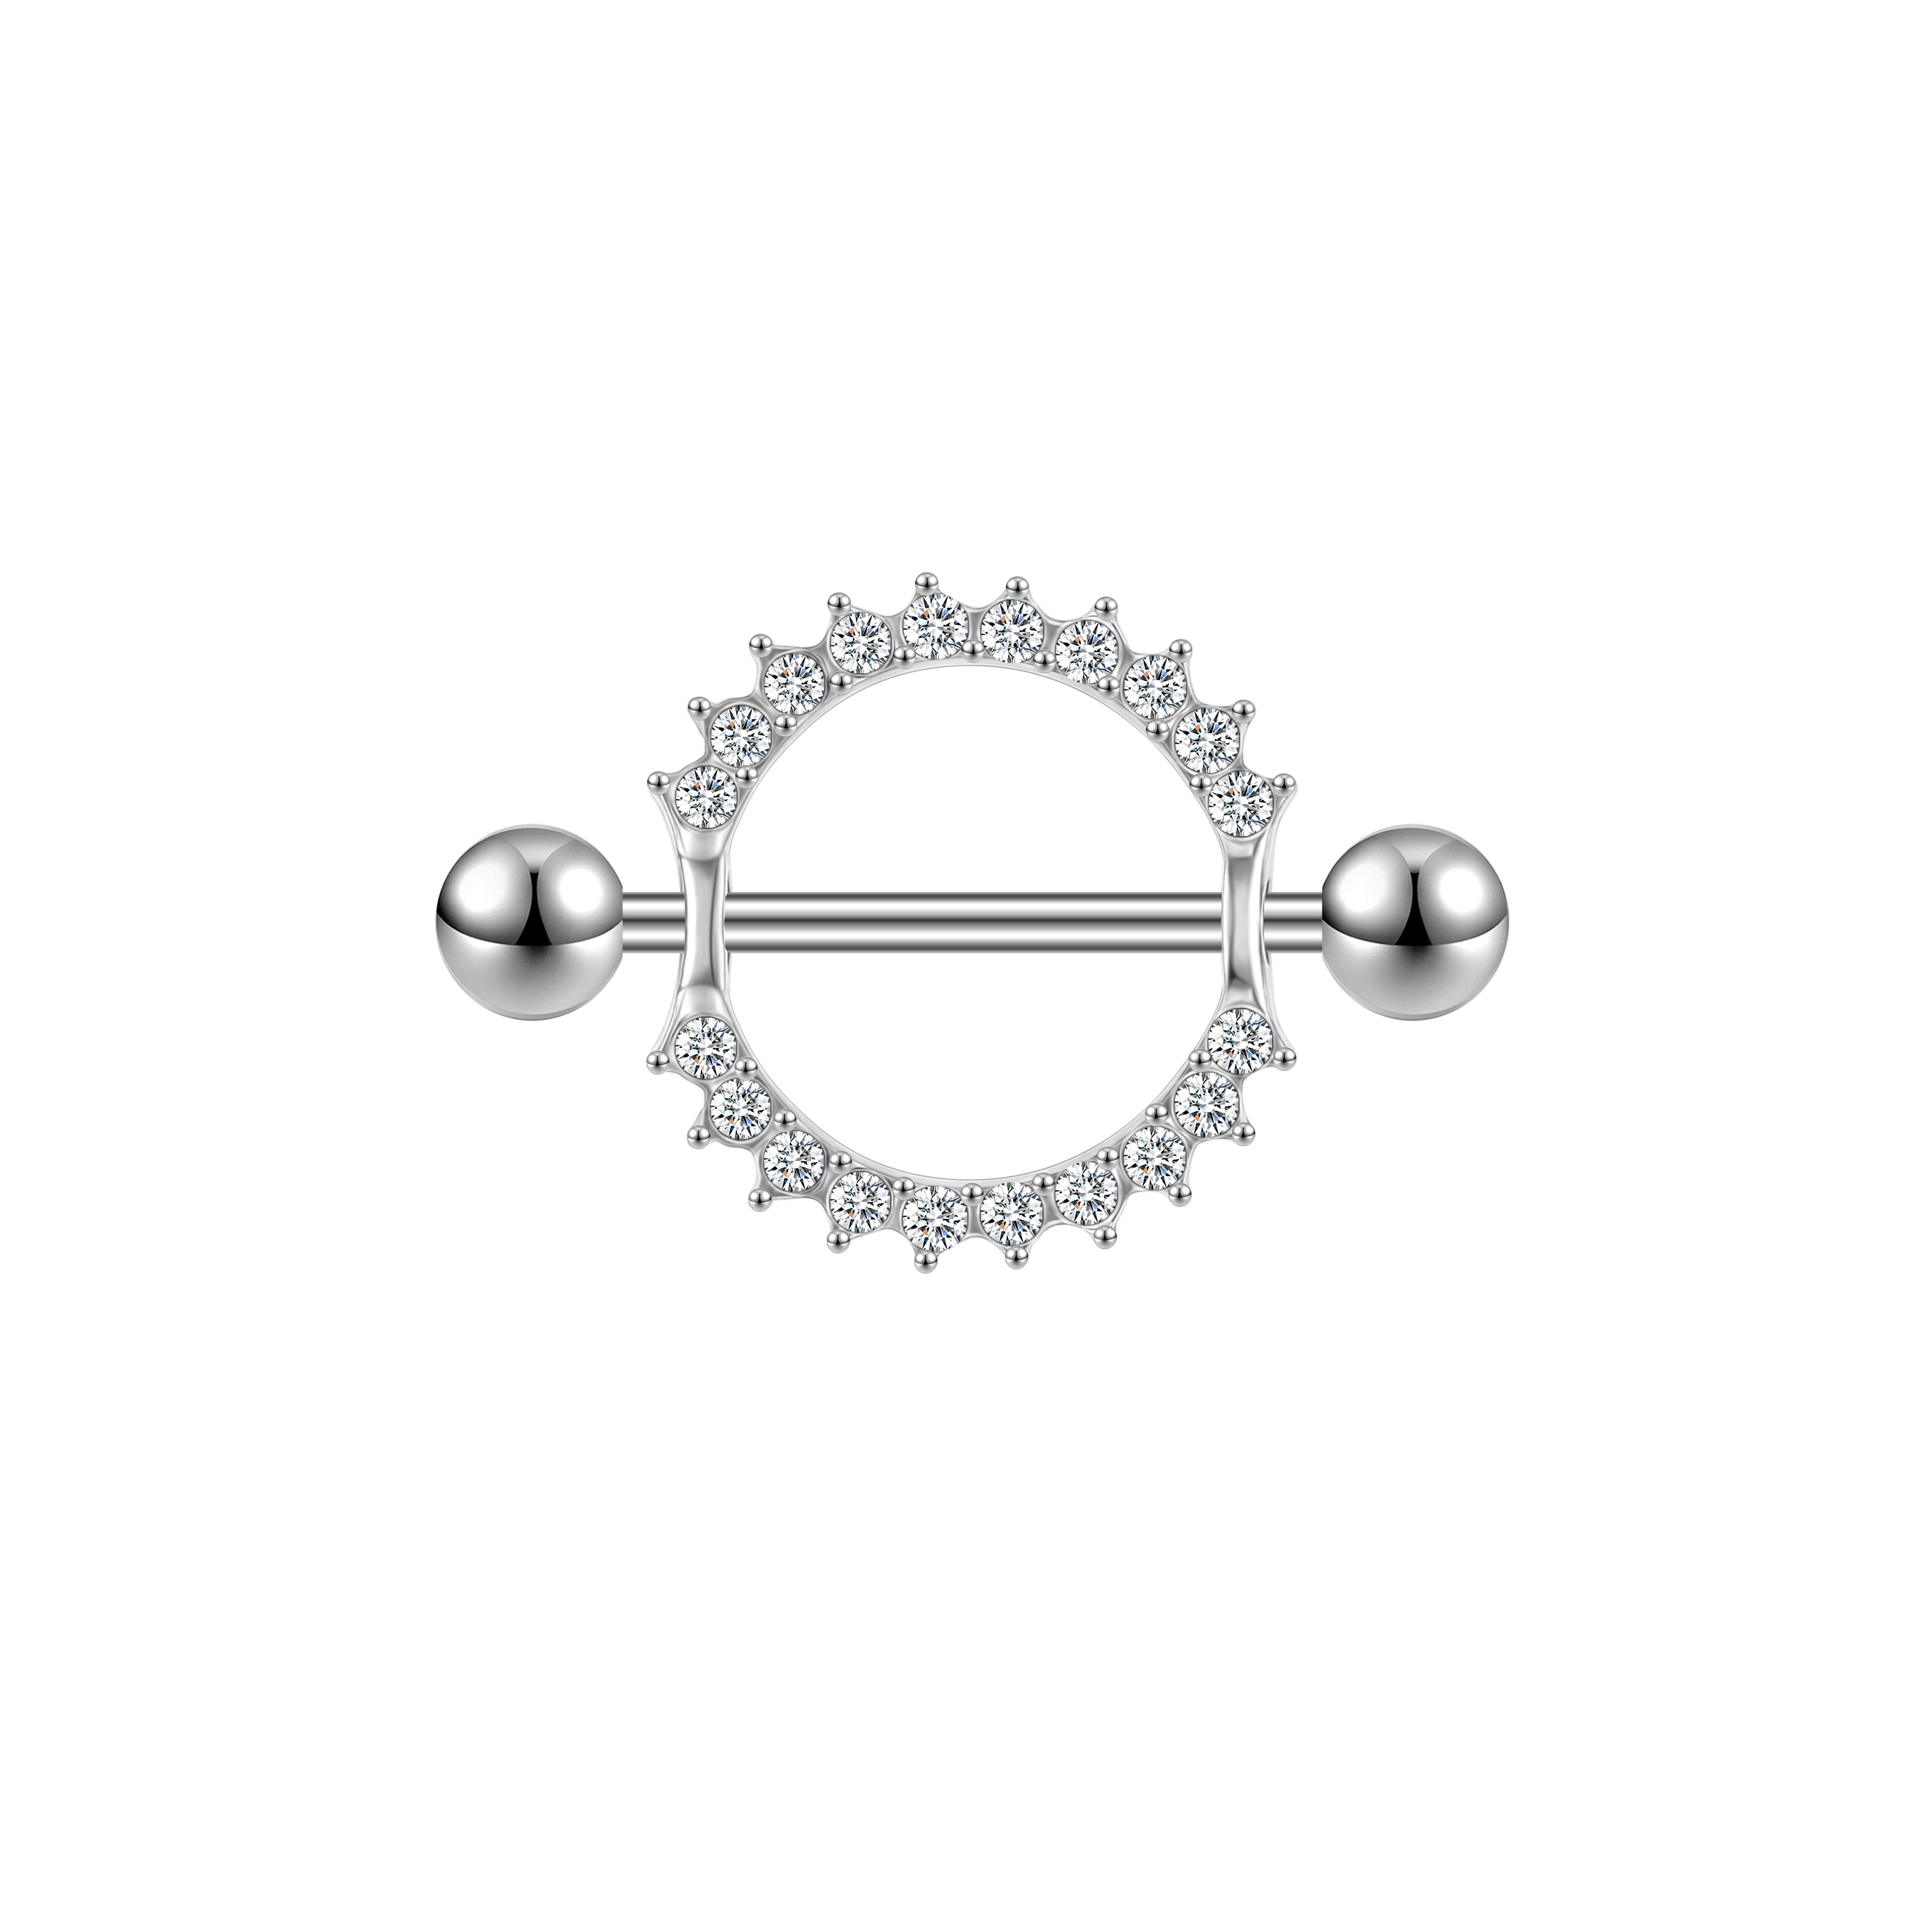 2Pcs 14G Stainless Steel Nipple Rings Bling Crystal Nipple Piercing Barbell Jewelry